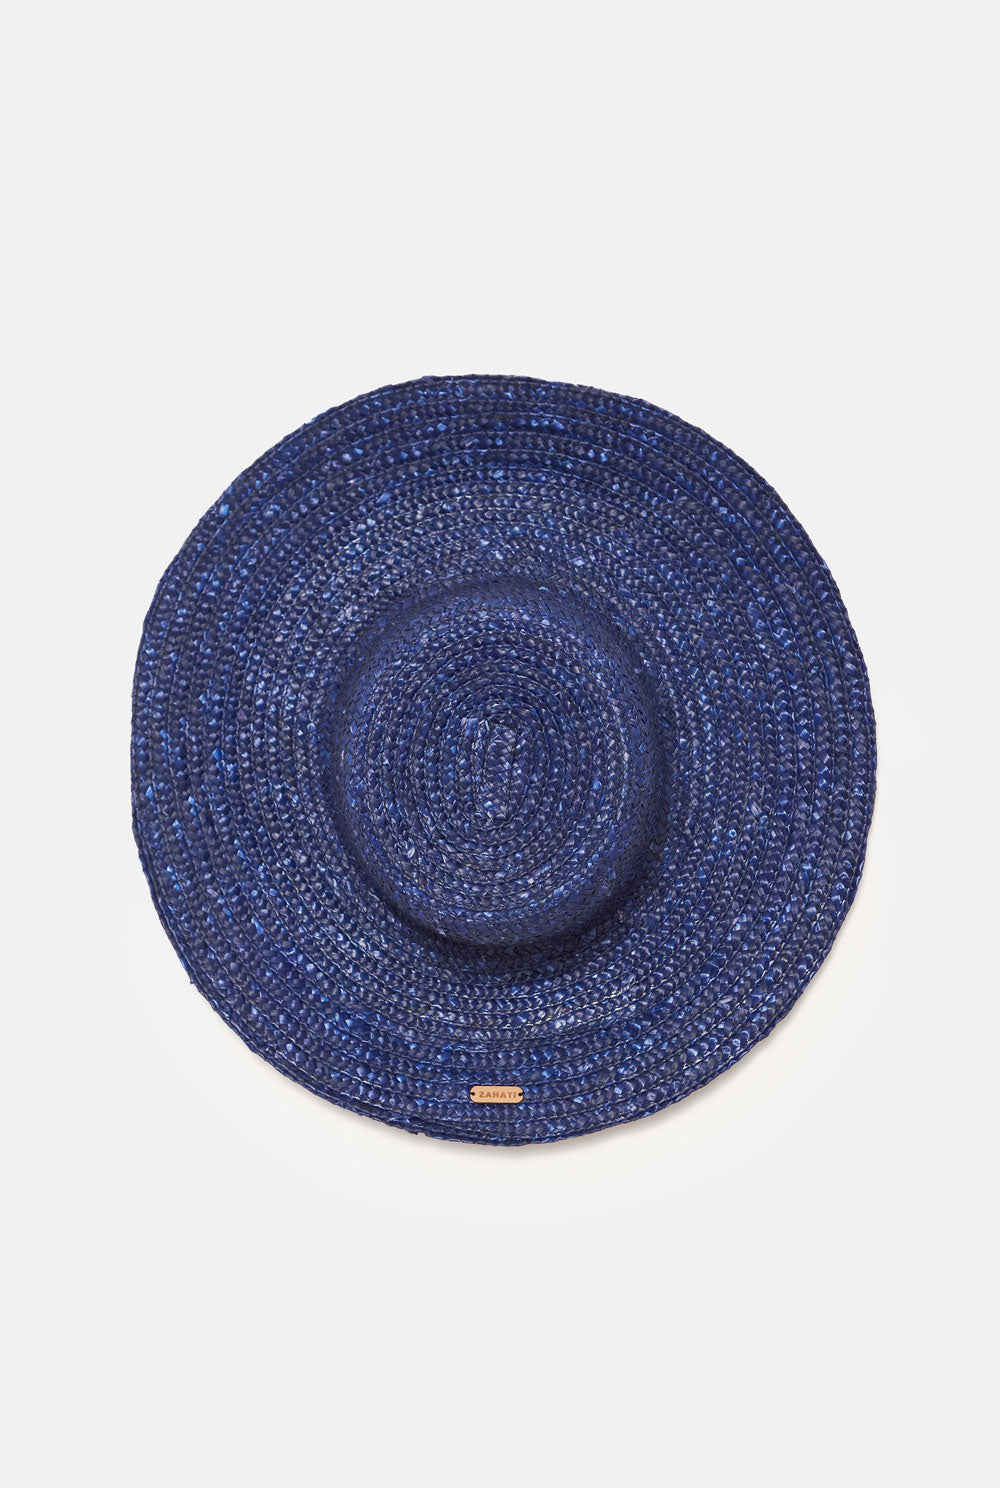 Canotier hat brim M blue headpiece Zahati 